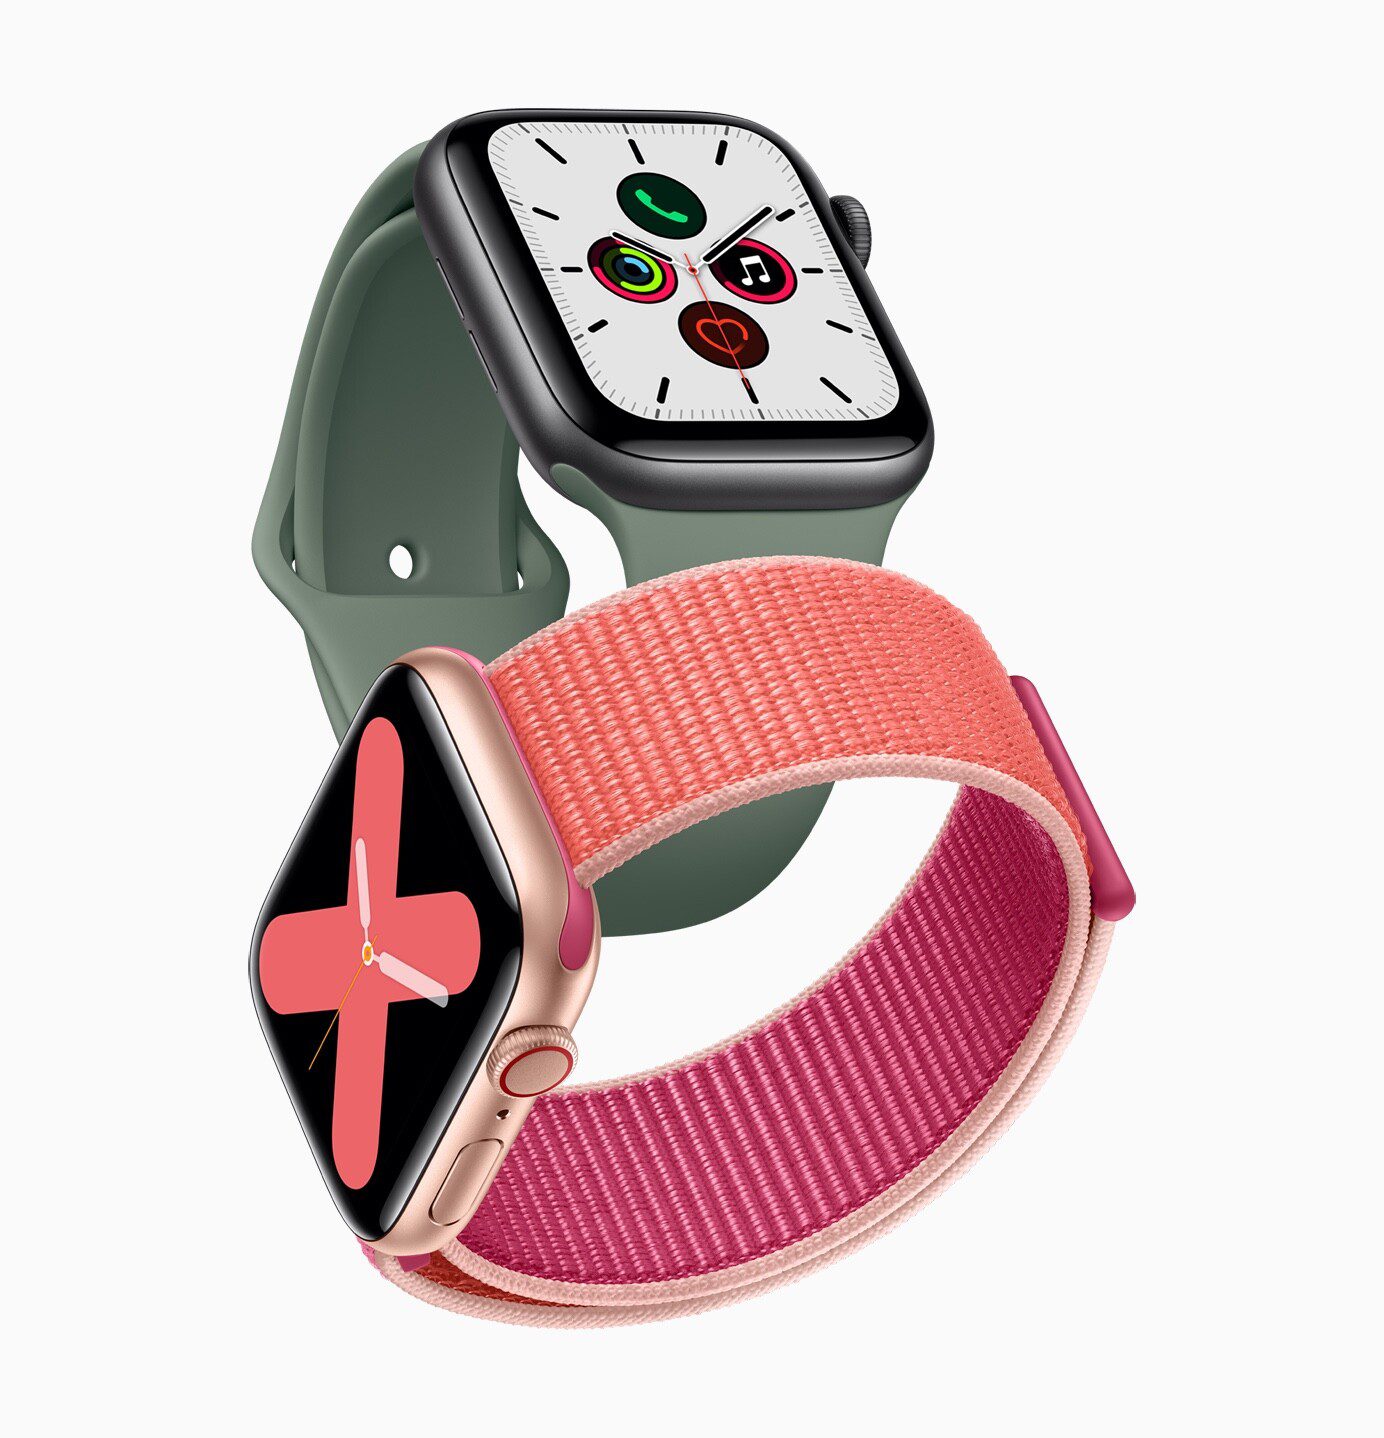 Apple Watch Series 5 Battery Draining Fast? Fix iPhoneGeeks